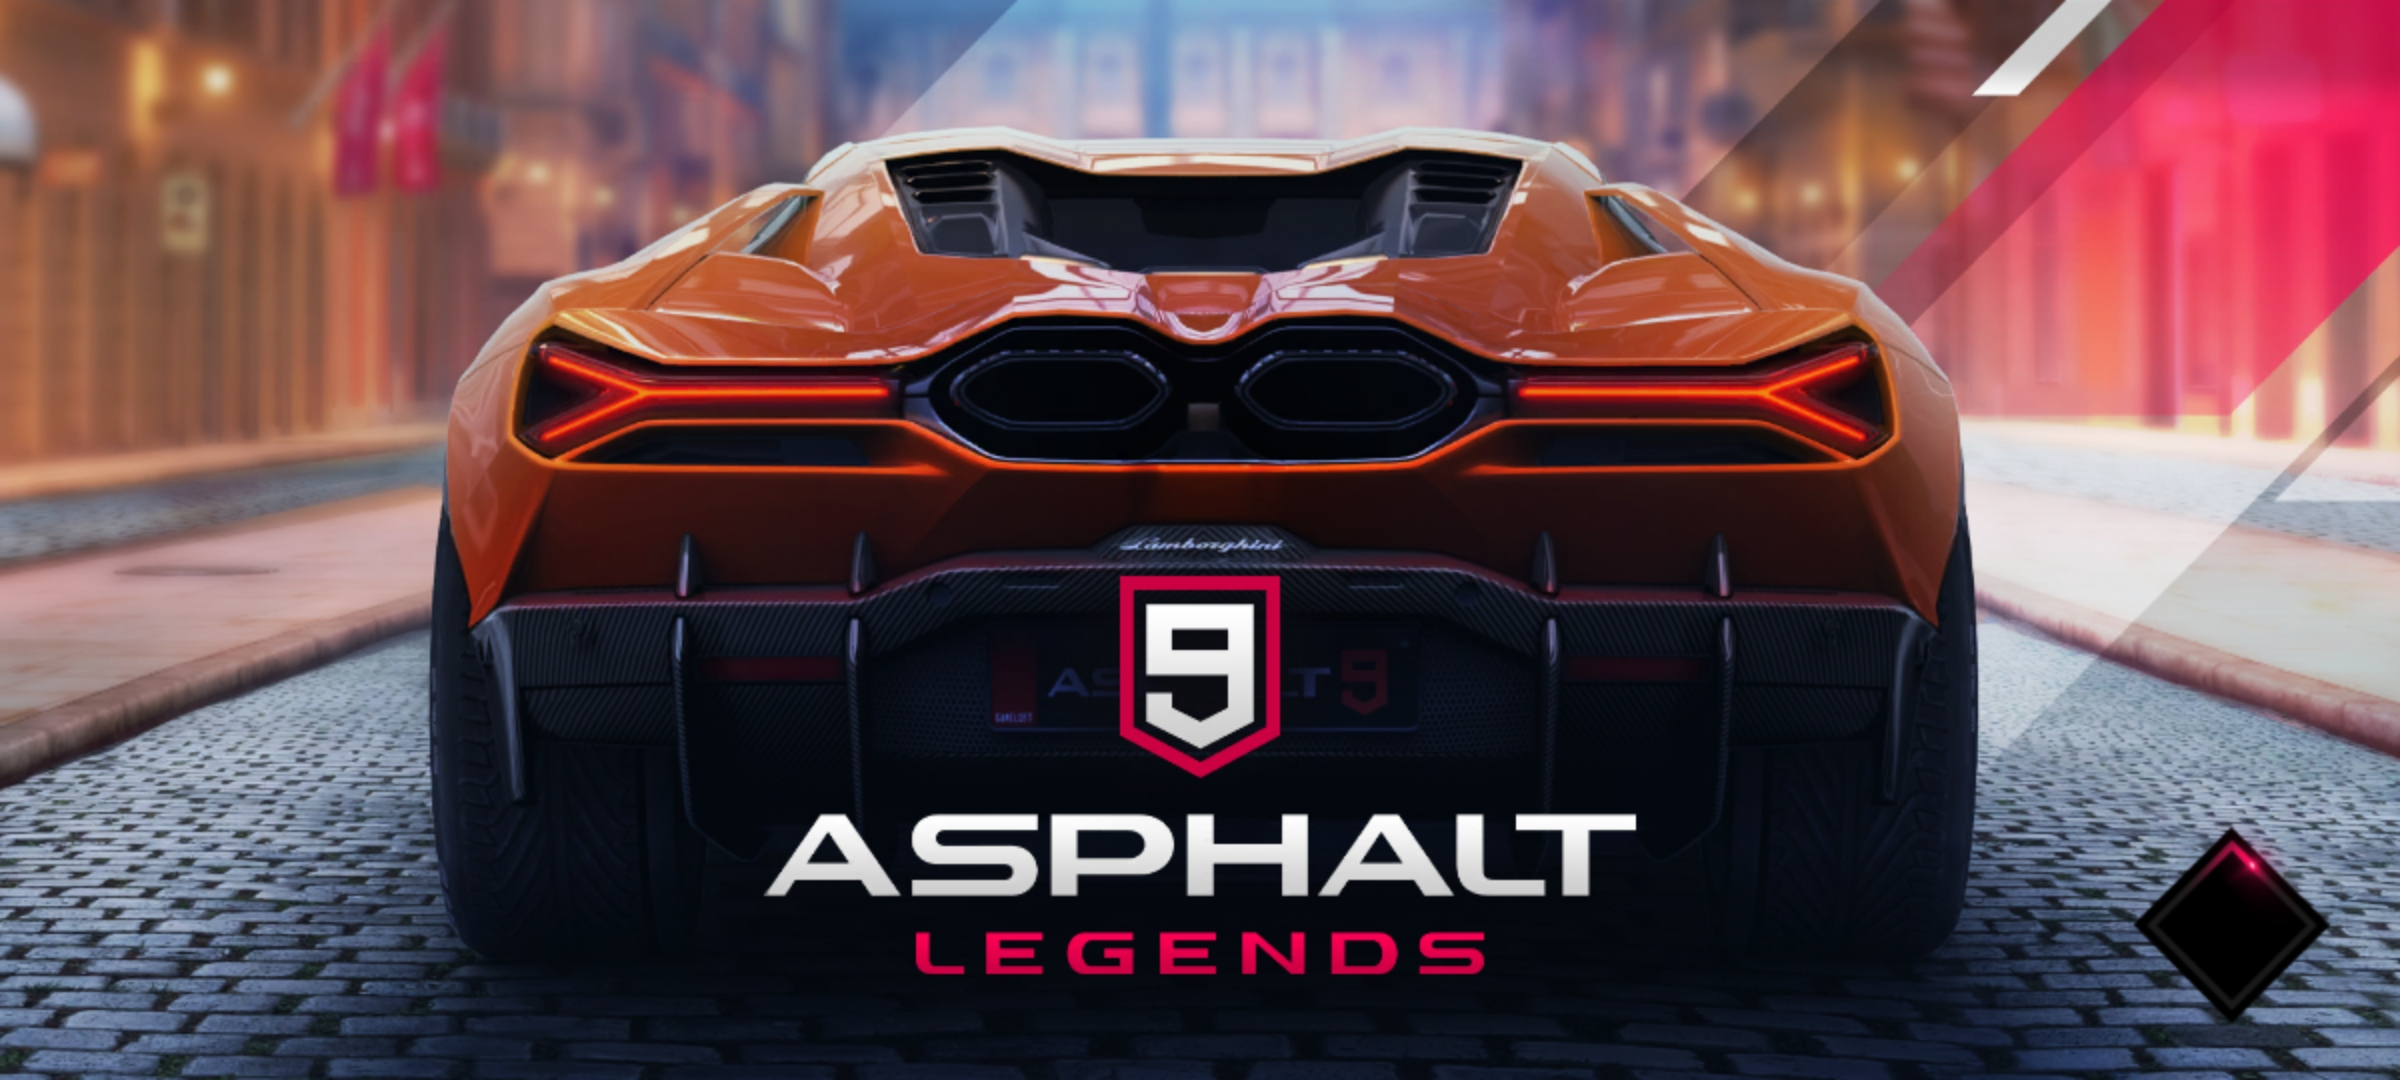 Asphalt 9: Legends (by Gameloft) - iPhone X 60FPS Gameplay 